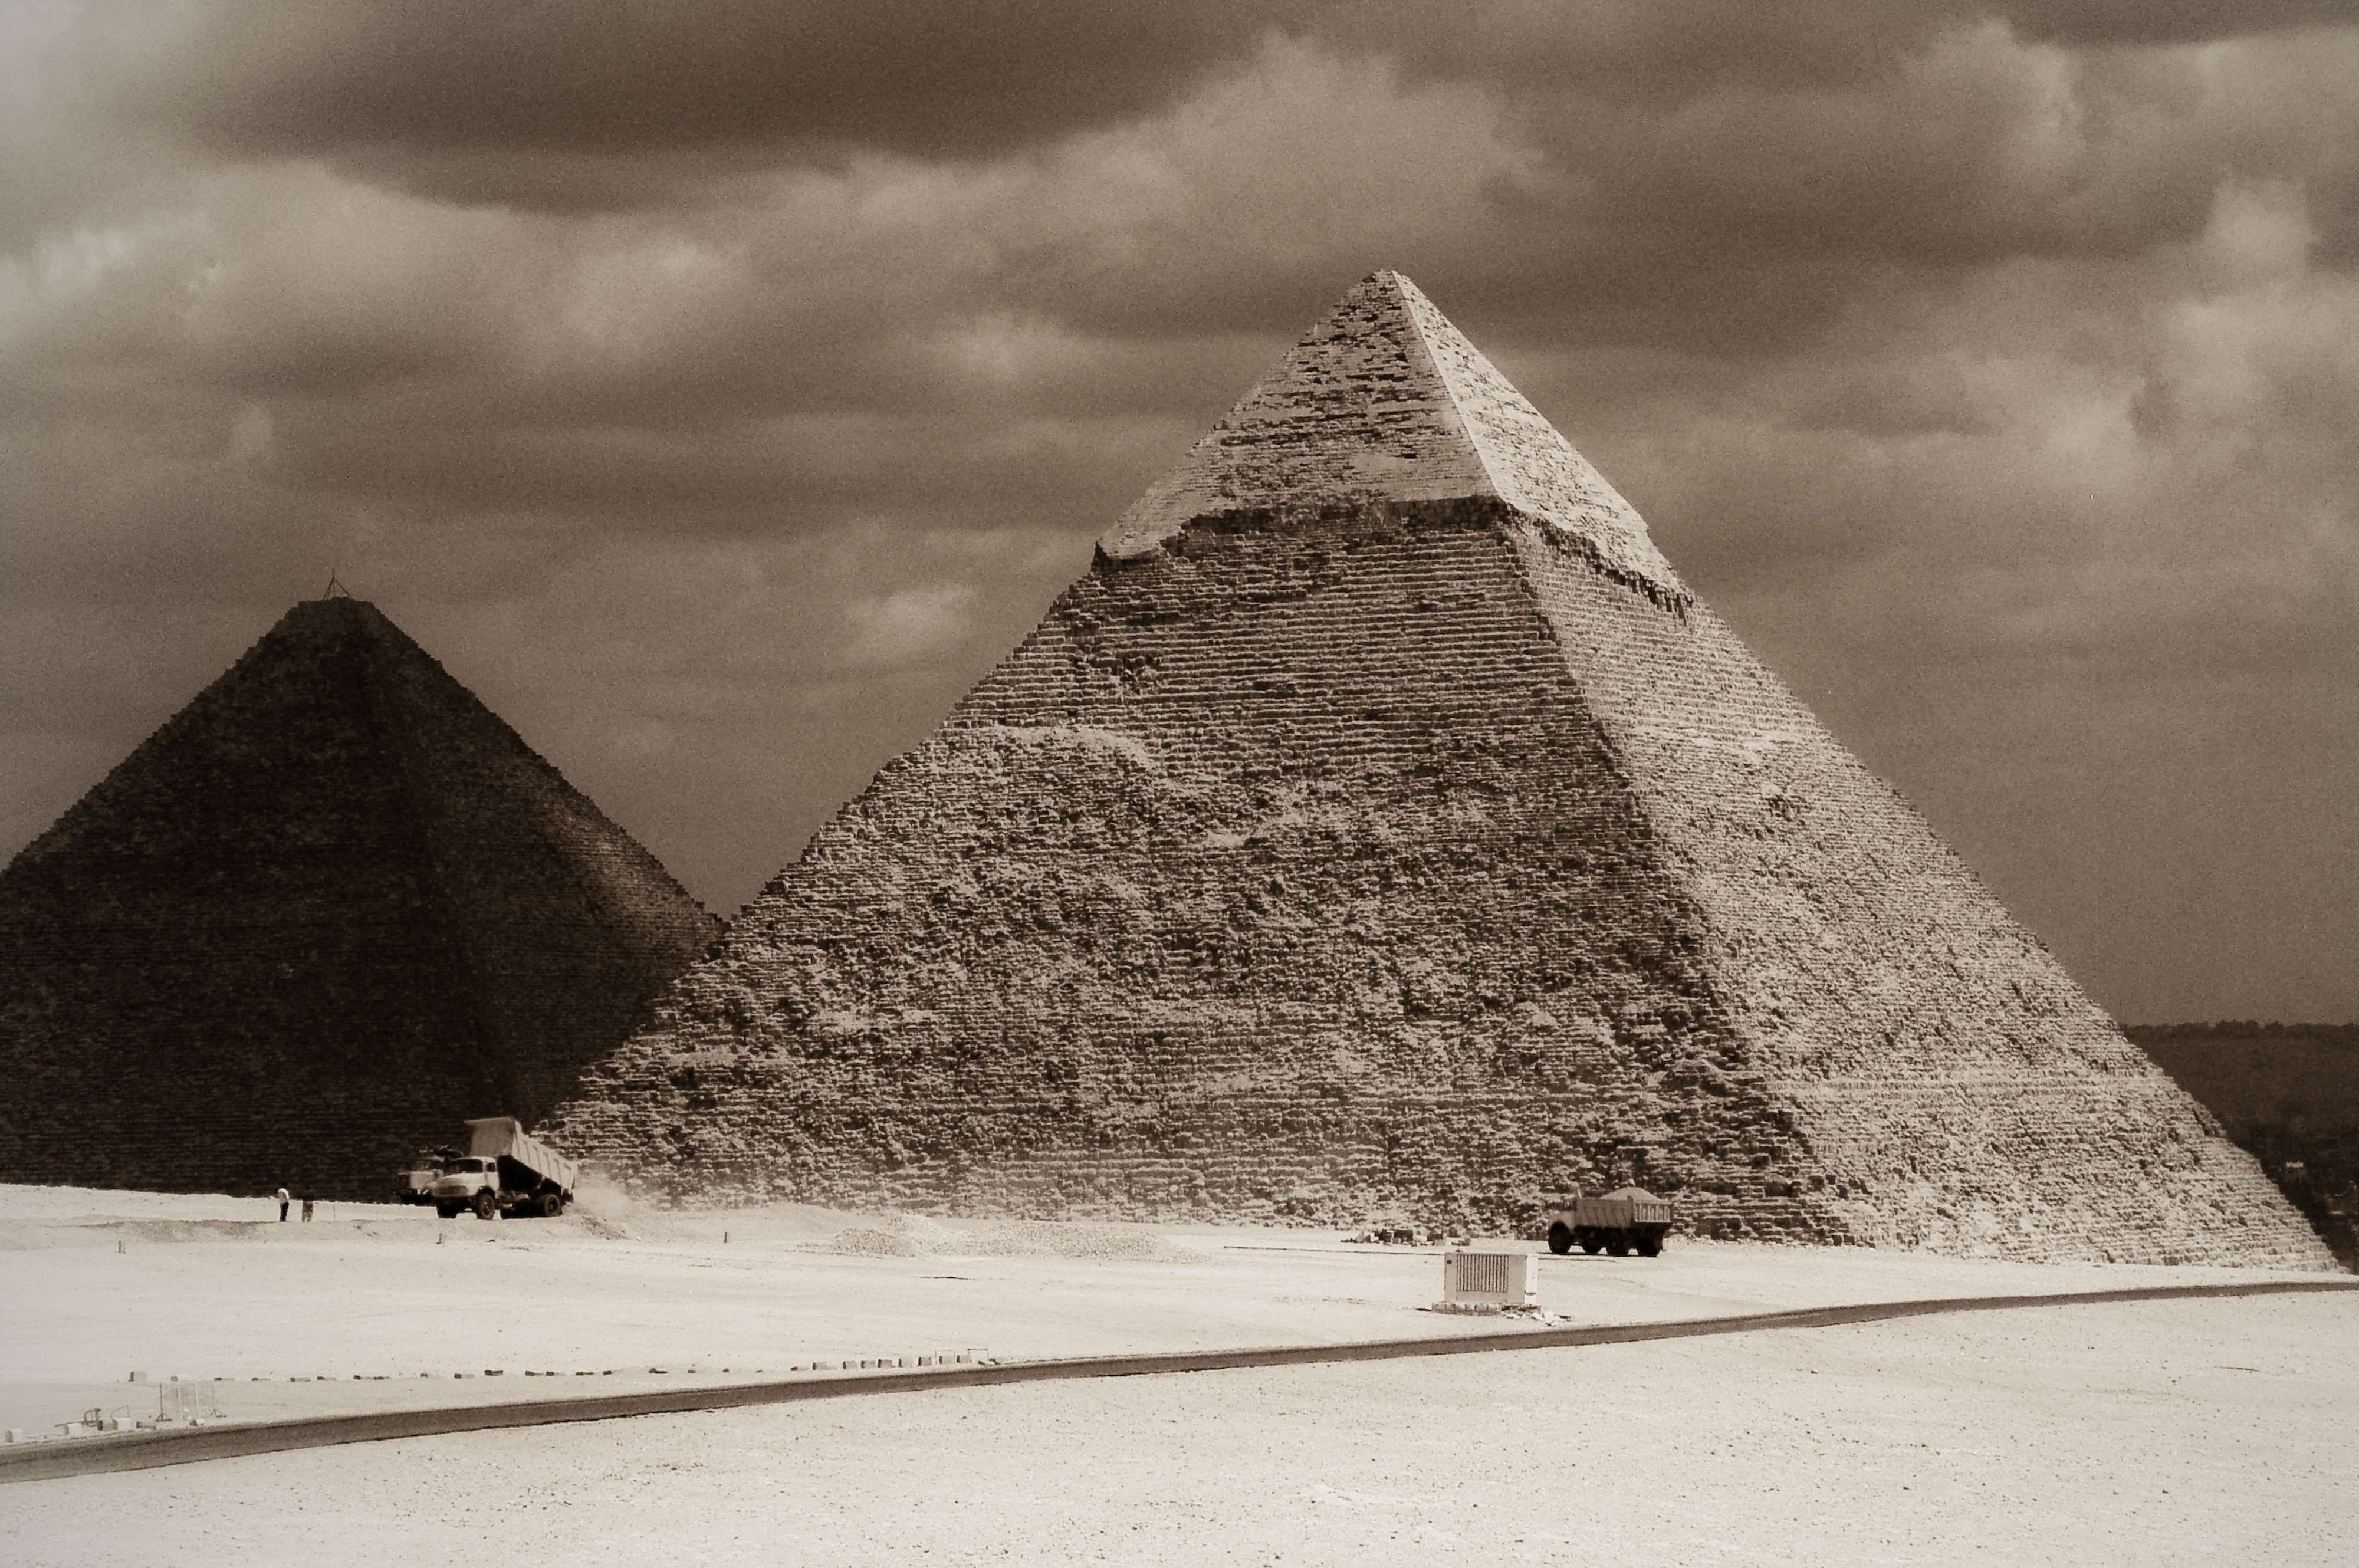 photograph, 2 pyramids